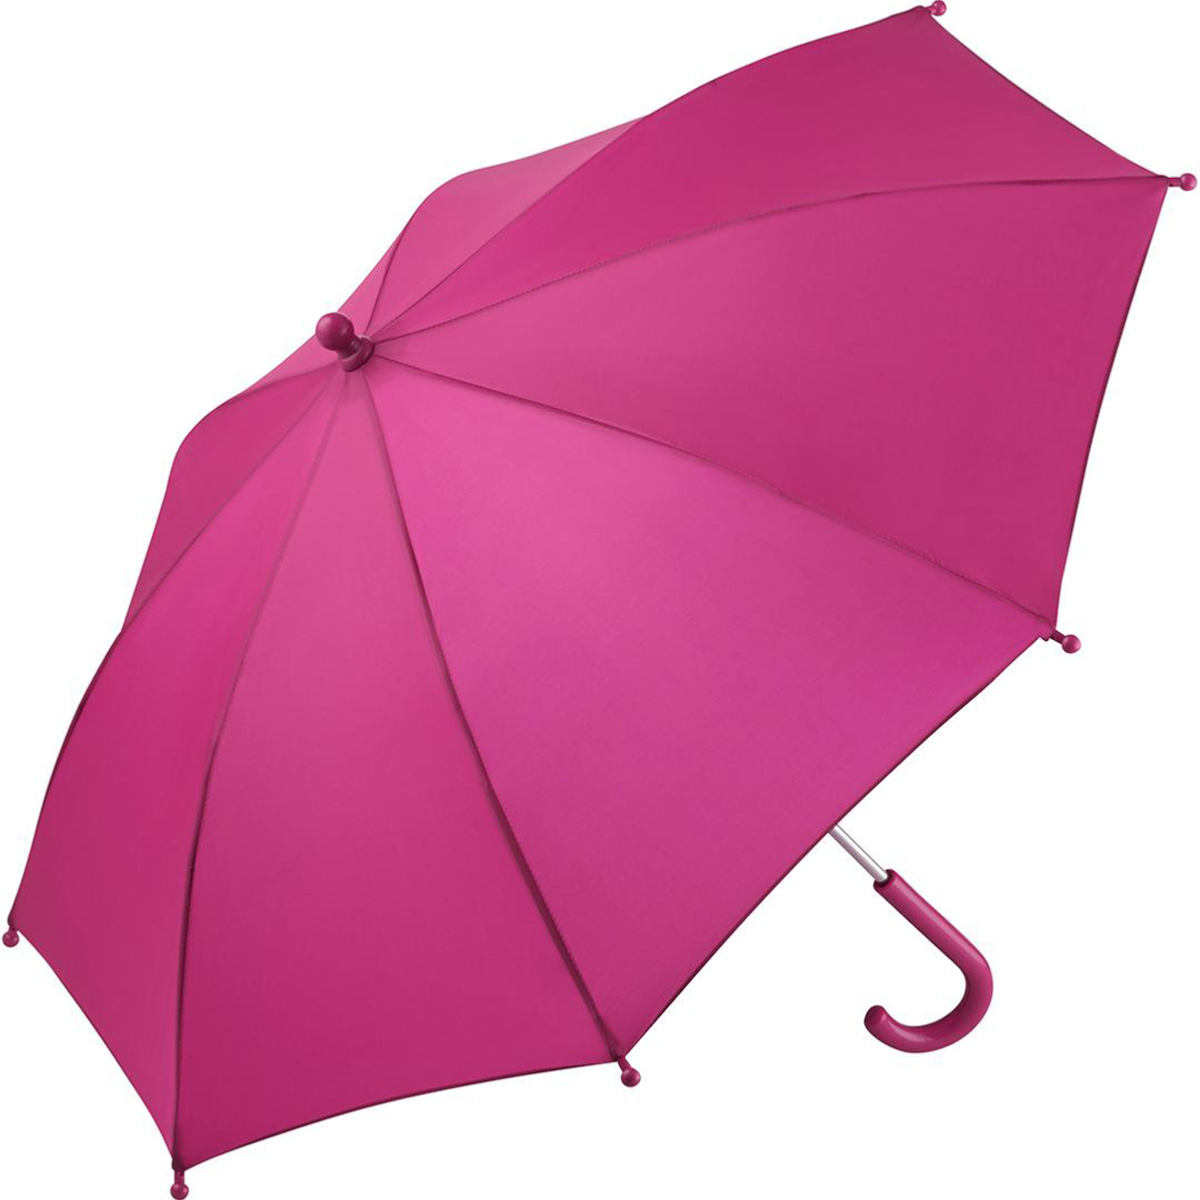 Performance Range Children's Walking Length Umbrella by Fare - Fuchsia Pink